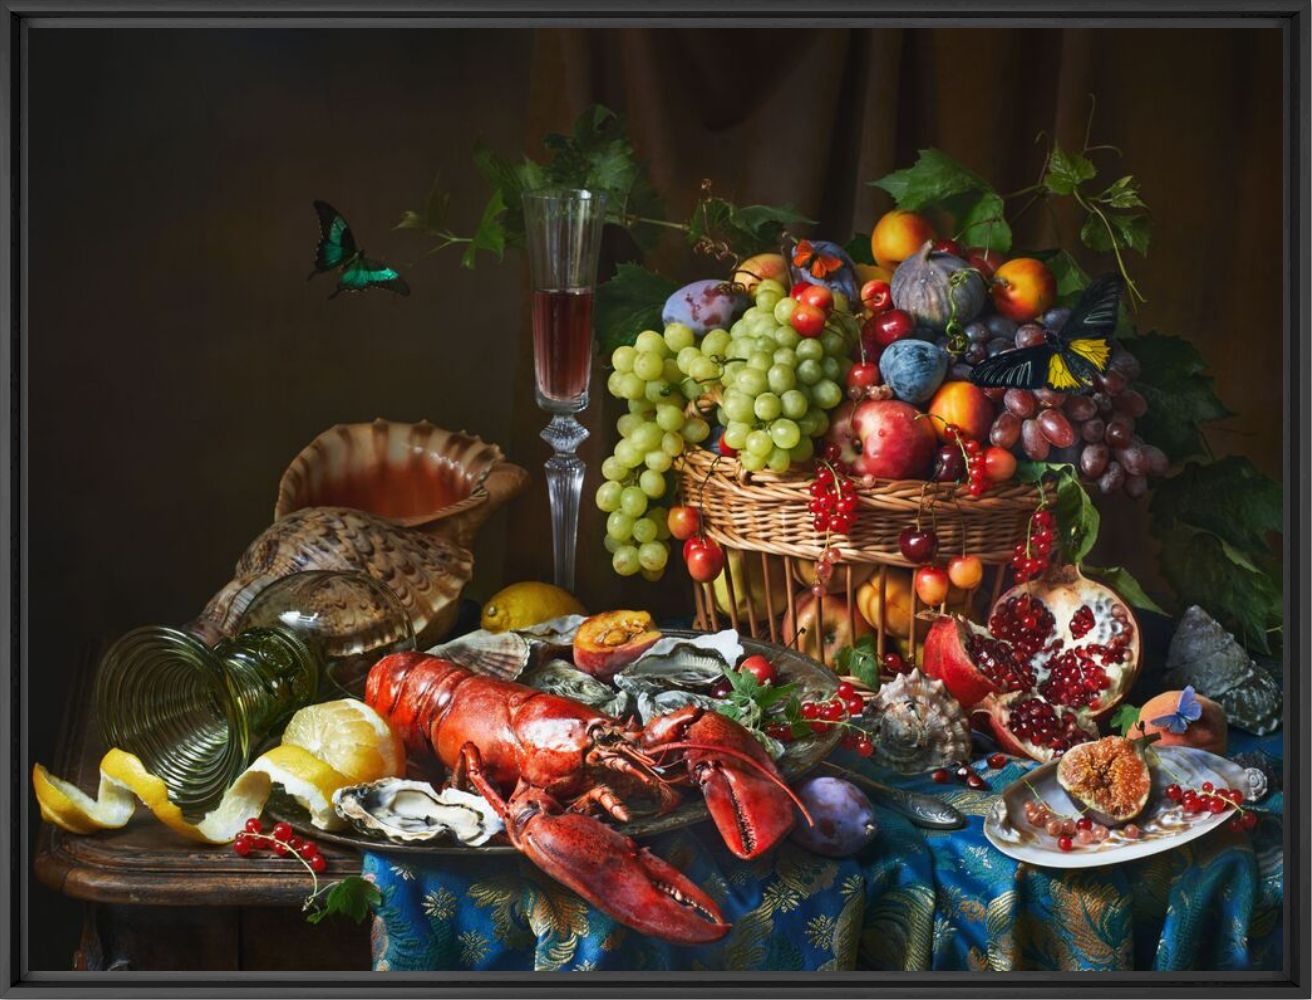 Photographie With lobster and fruits - Alena Kutnikova - Tableau photo